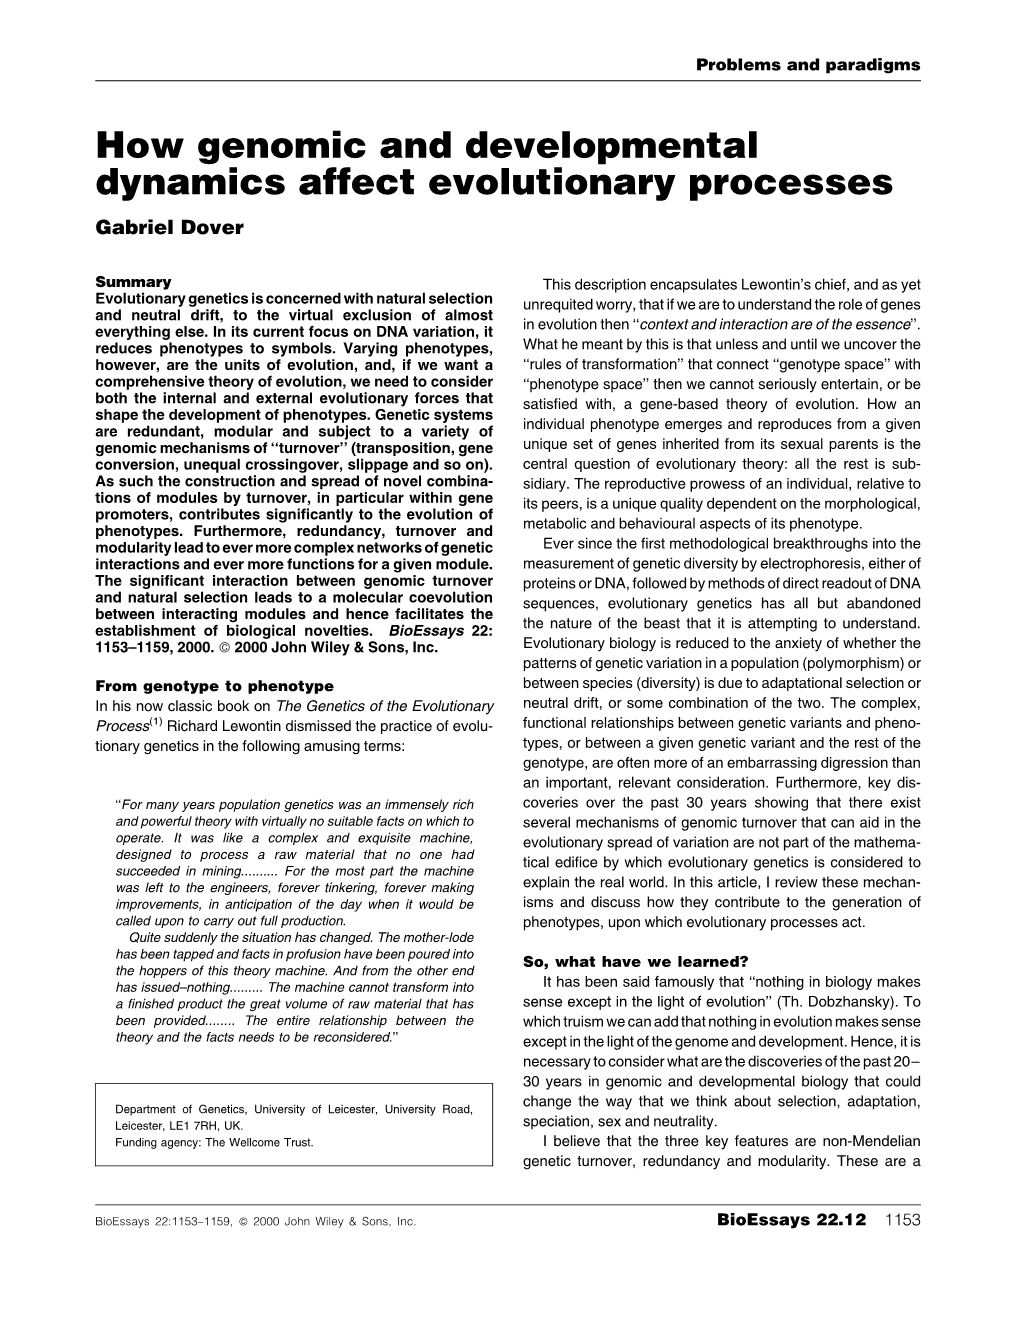 How Genomic and Developmental Dynamics Affect Evolutionary Processes